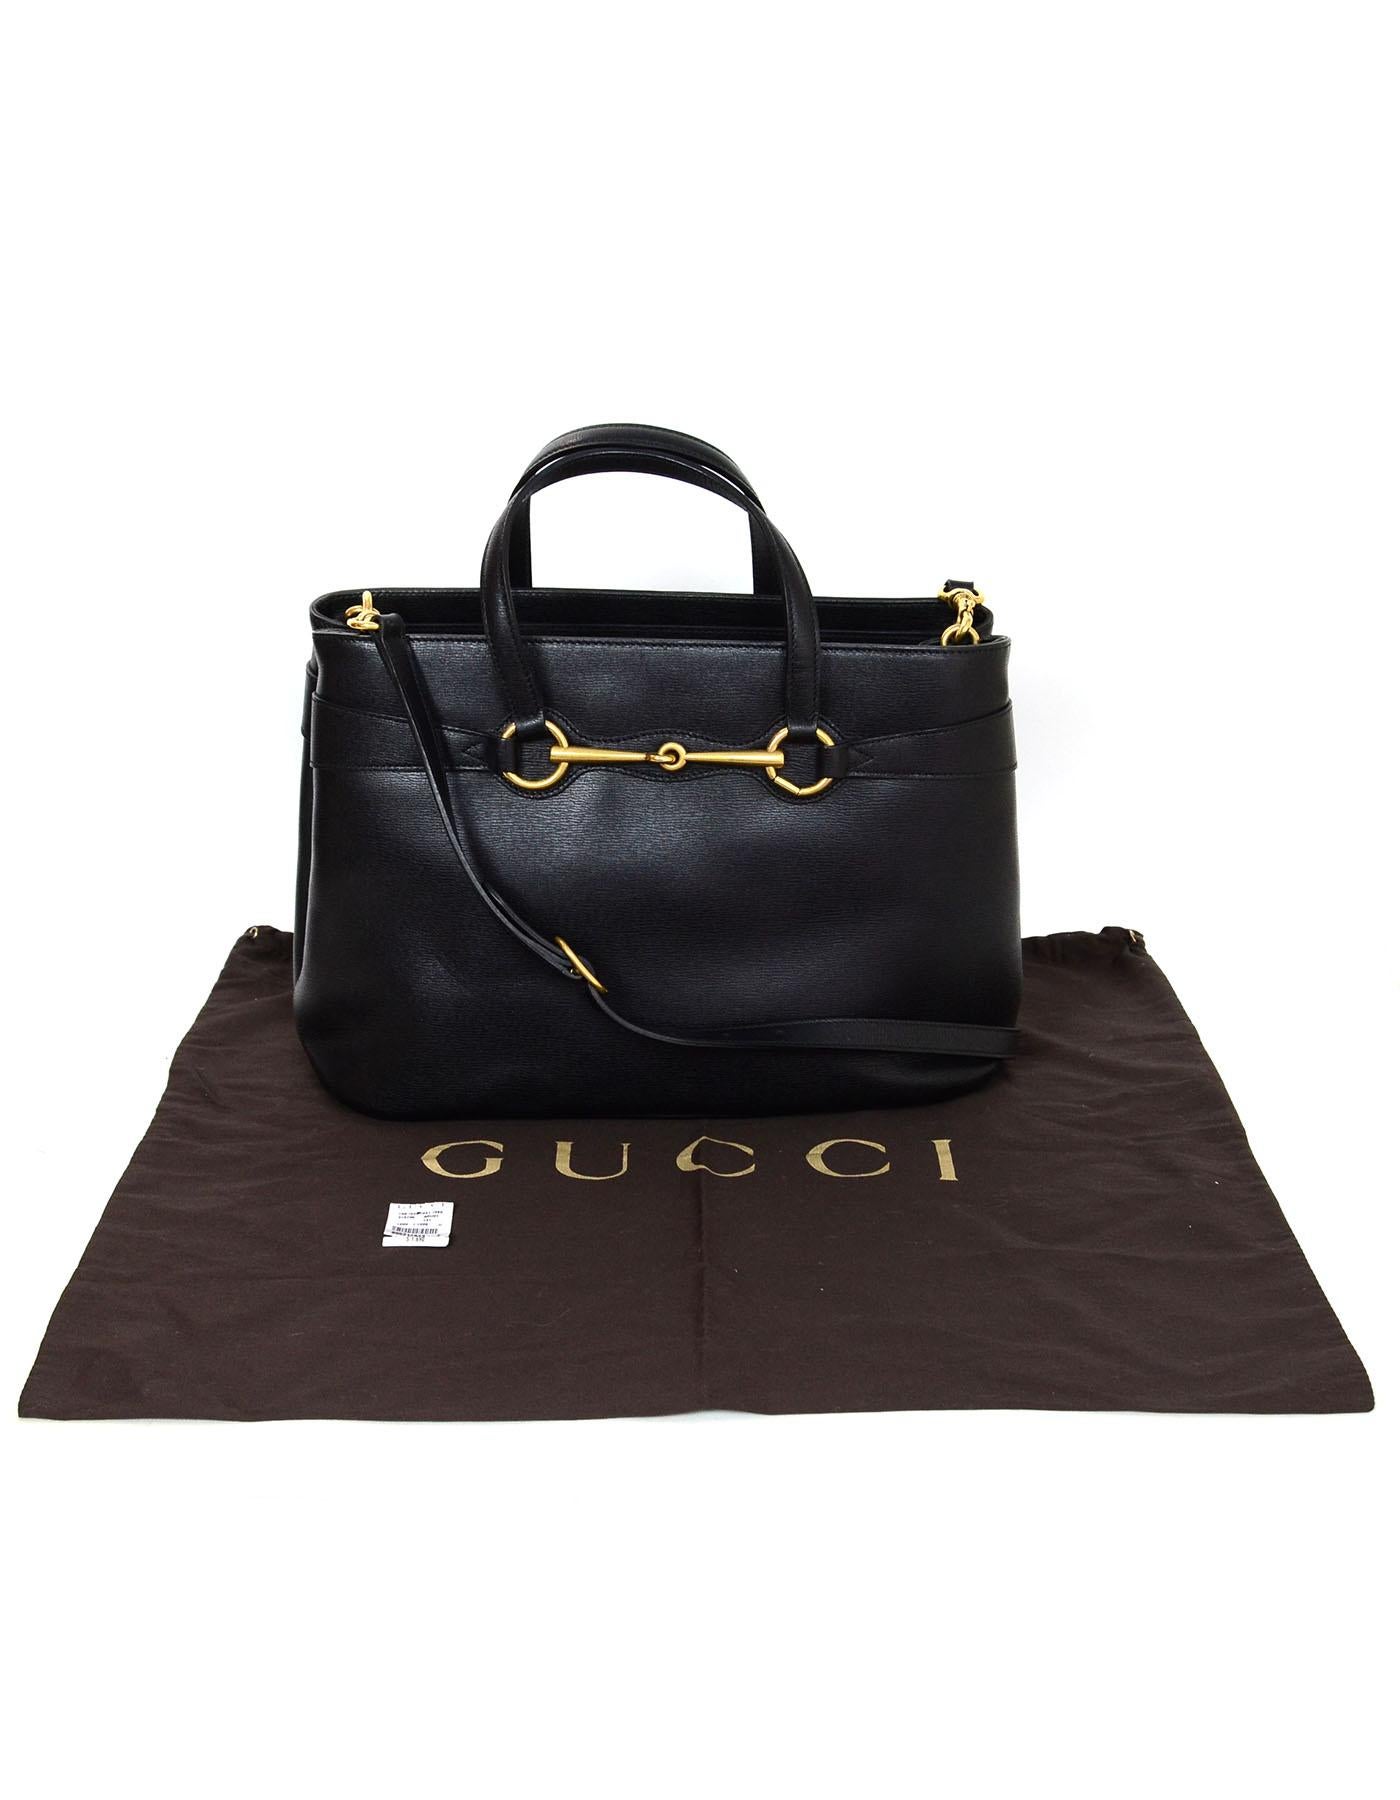 Gucci Black Medium Bright Bit Leather Satchel Bag with Dust Bag  6